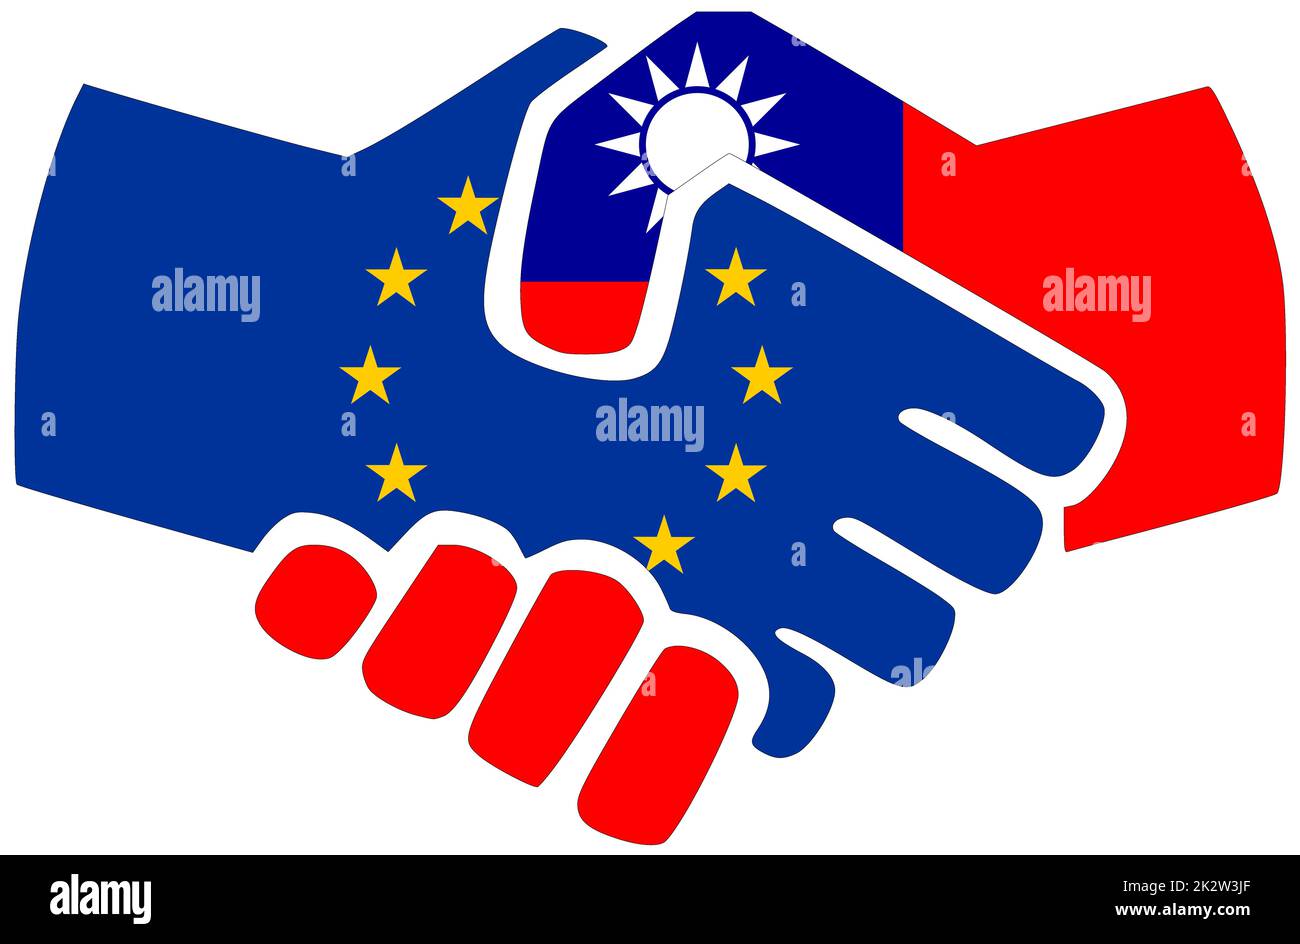 EU - Taiwan : Handshake, symbol of agreement or friendship Stock Photo